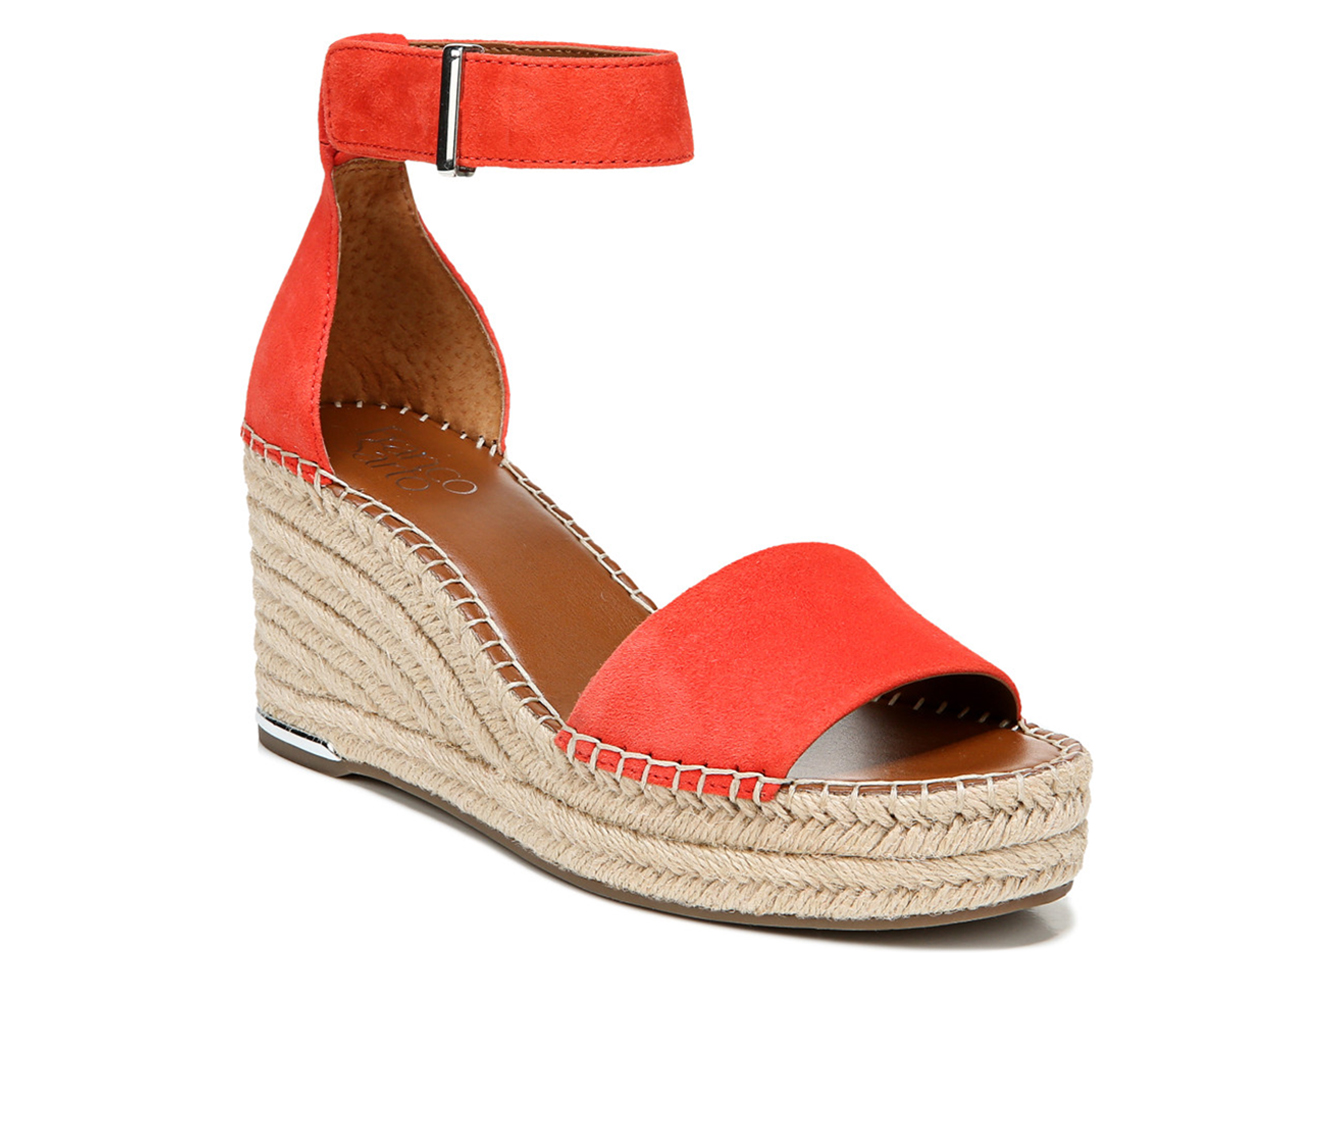 Women's Franco Sarto L-Clemens Wedge Sandals in Tangelo Size 6 Medium